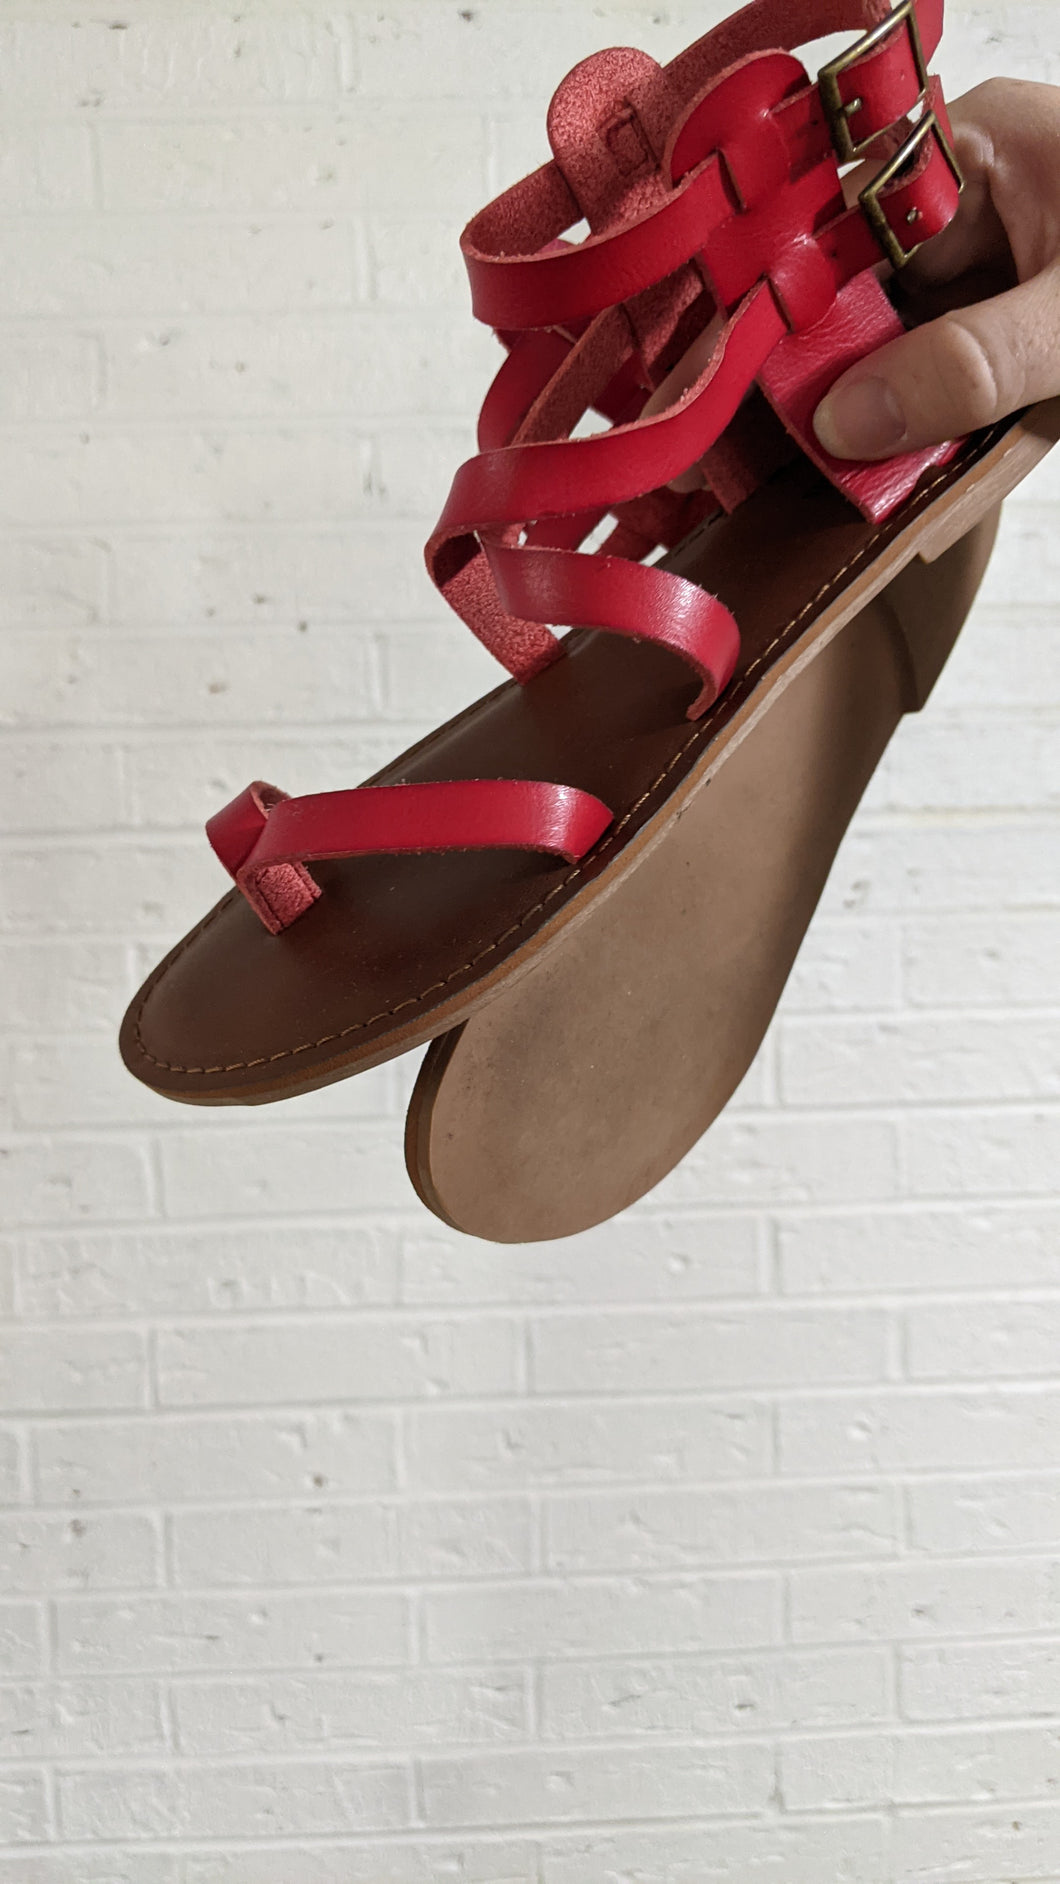 7 - Red Gladiator Sandals